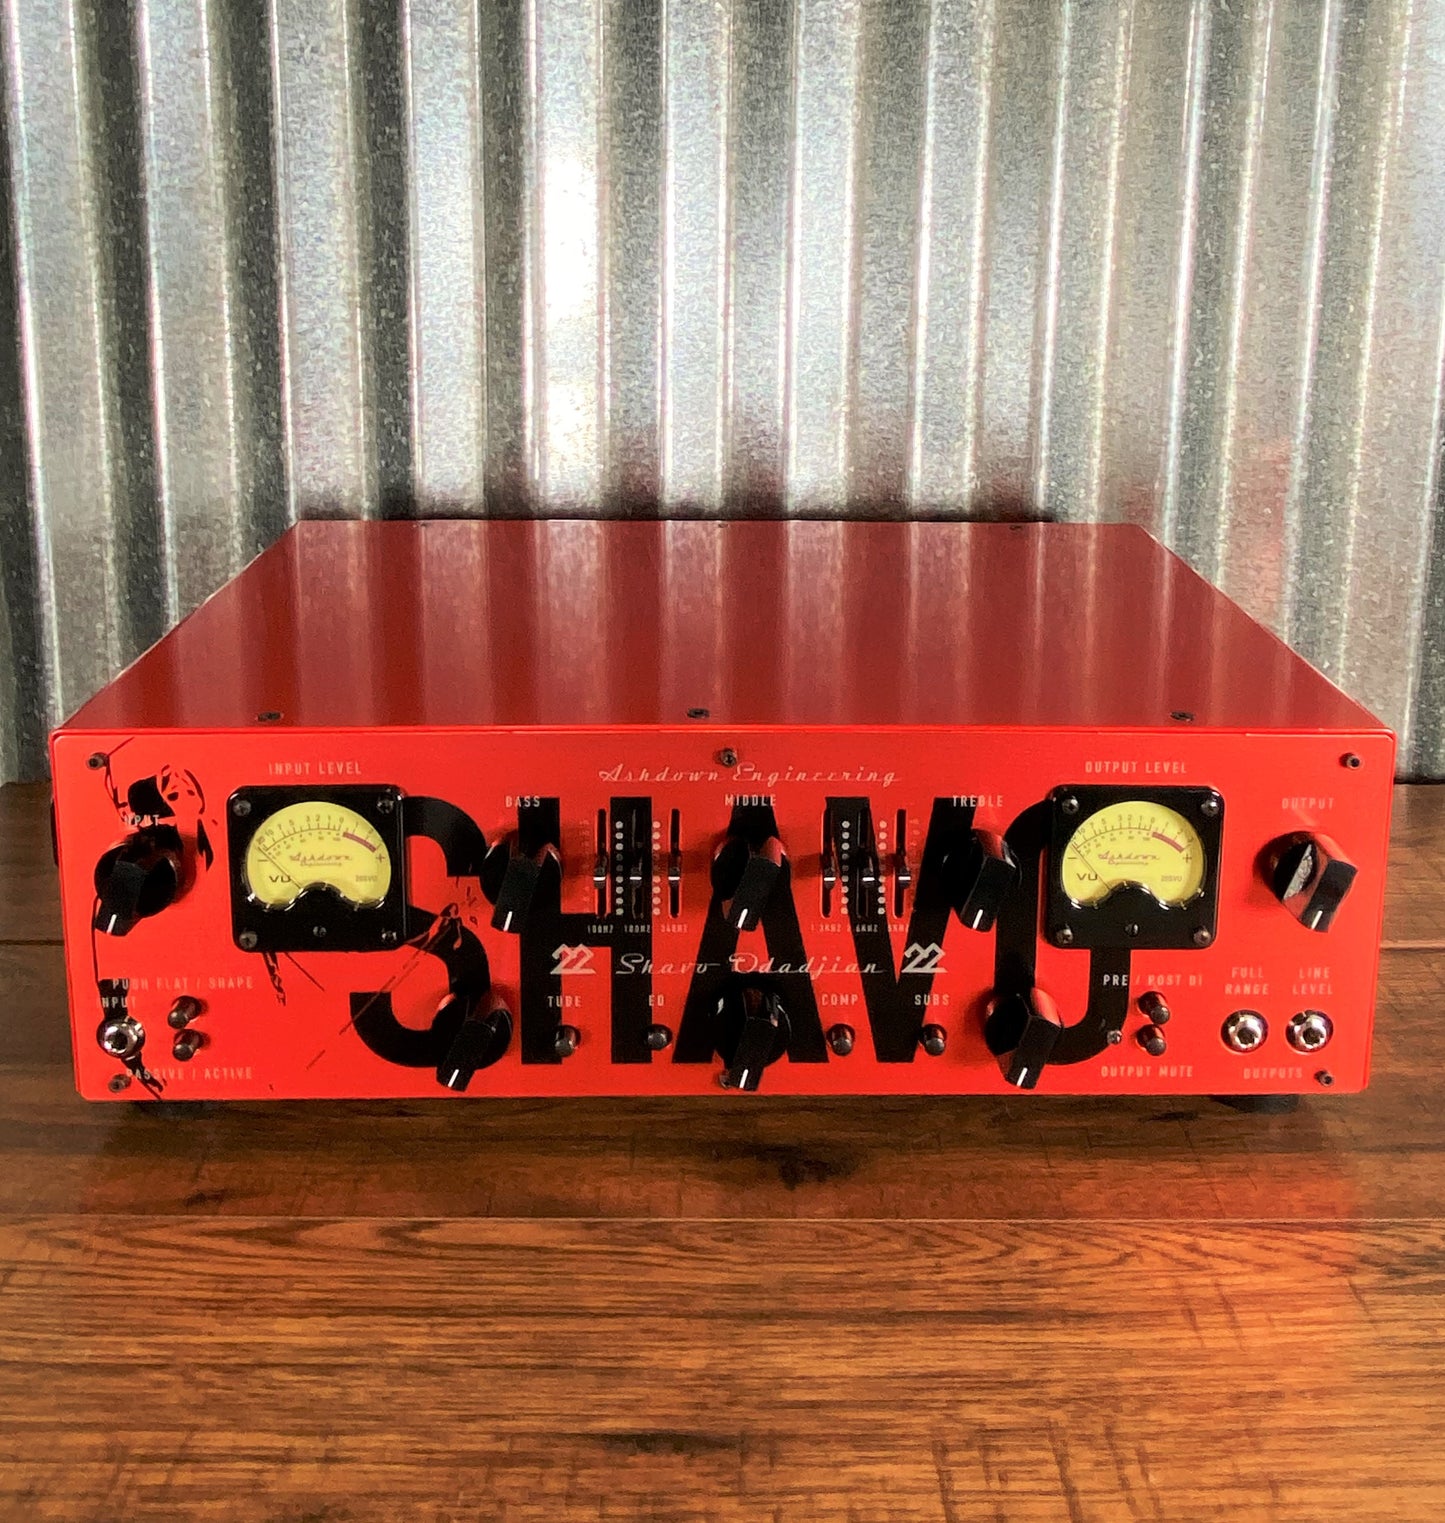 Ashdown Engineering Shavo 22-HEAD 600 Watt Tube Preamp Bass Amplifier Head